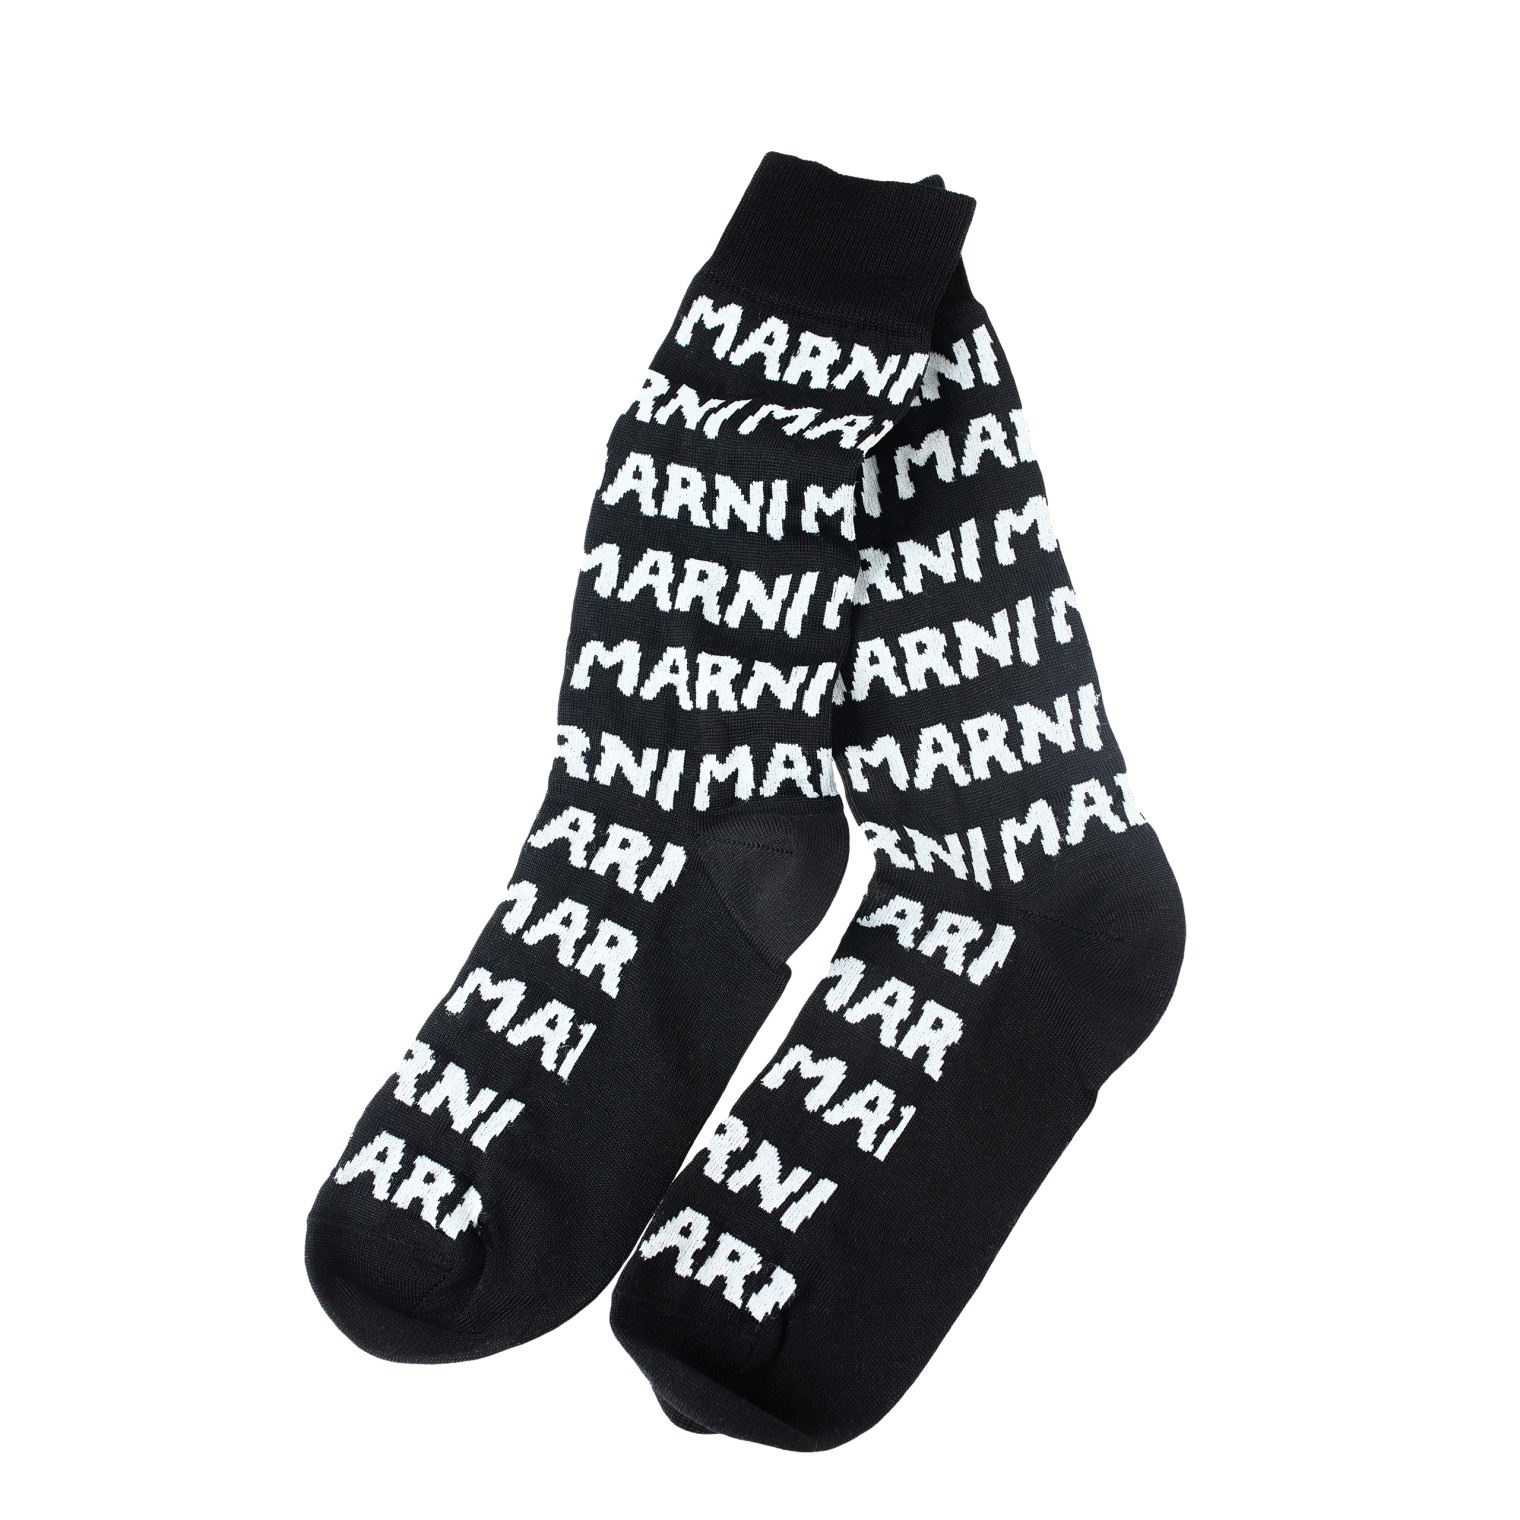 Marni Black logo socks